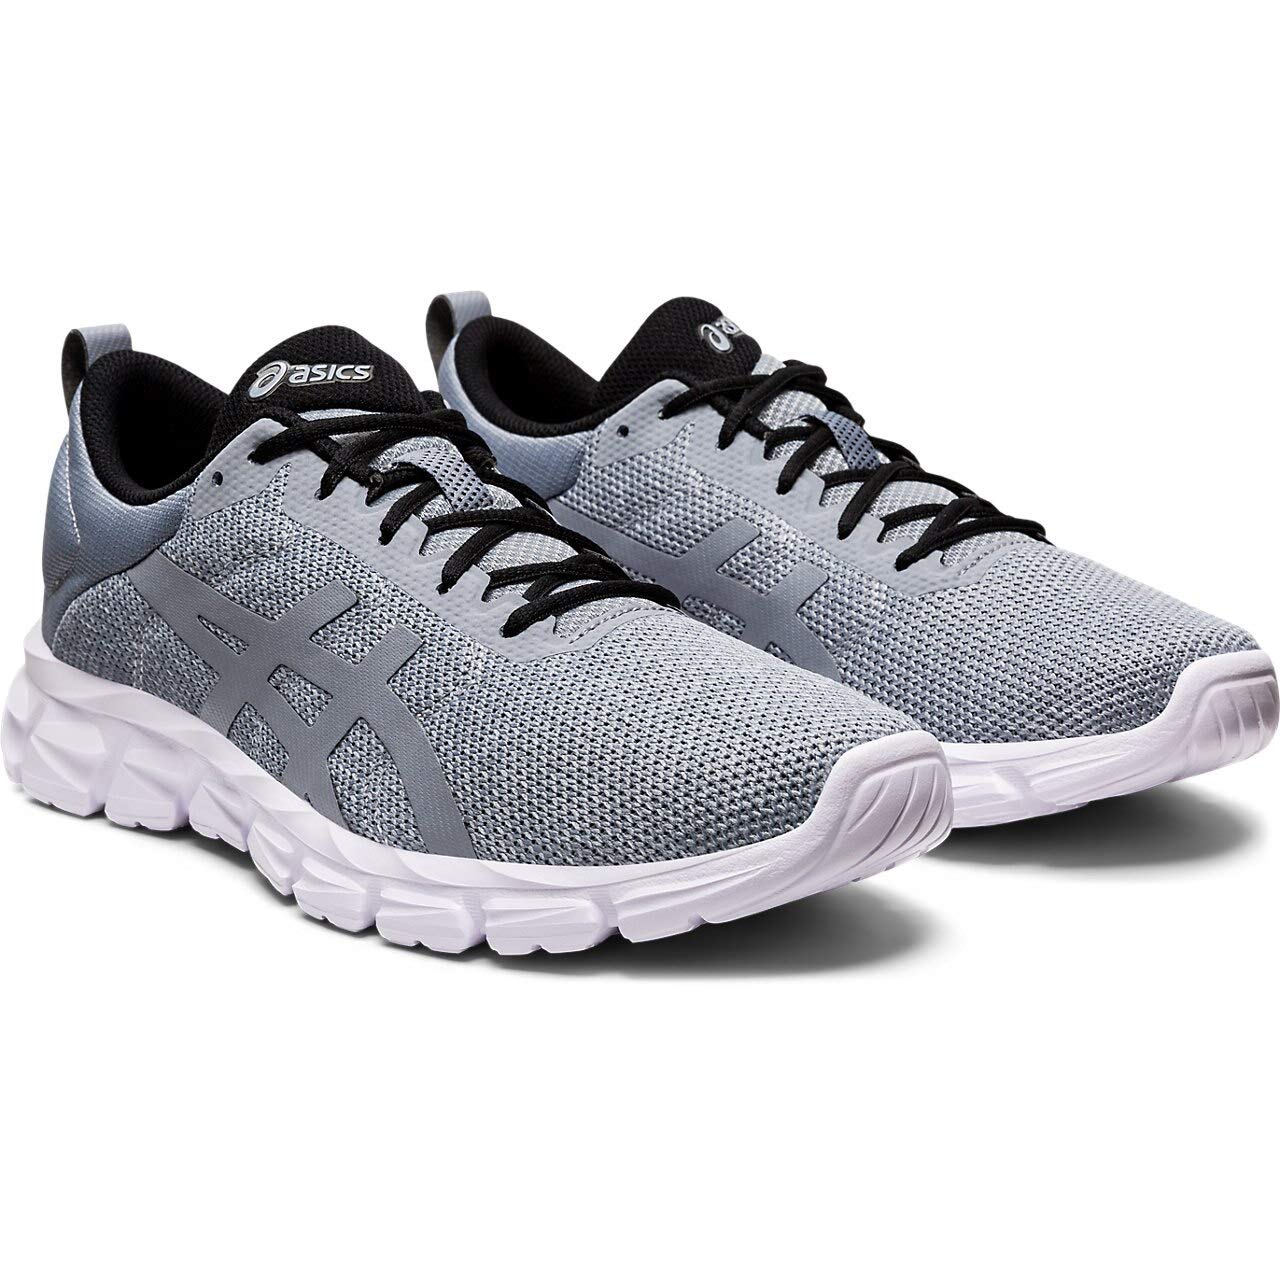 ASICS Men's Gel-Quantum Lyte Sneakers Running Shoes - Best Price online Prokicksports.com